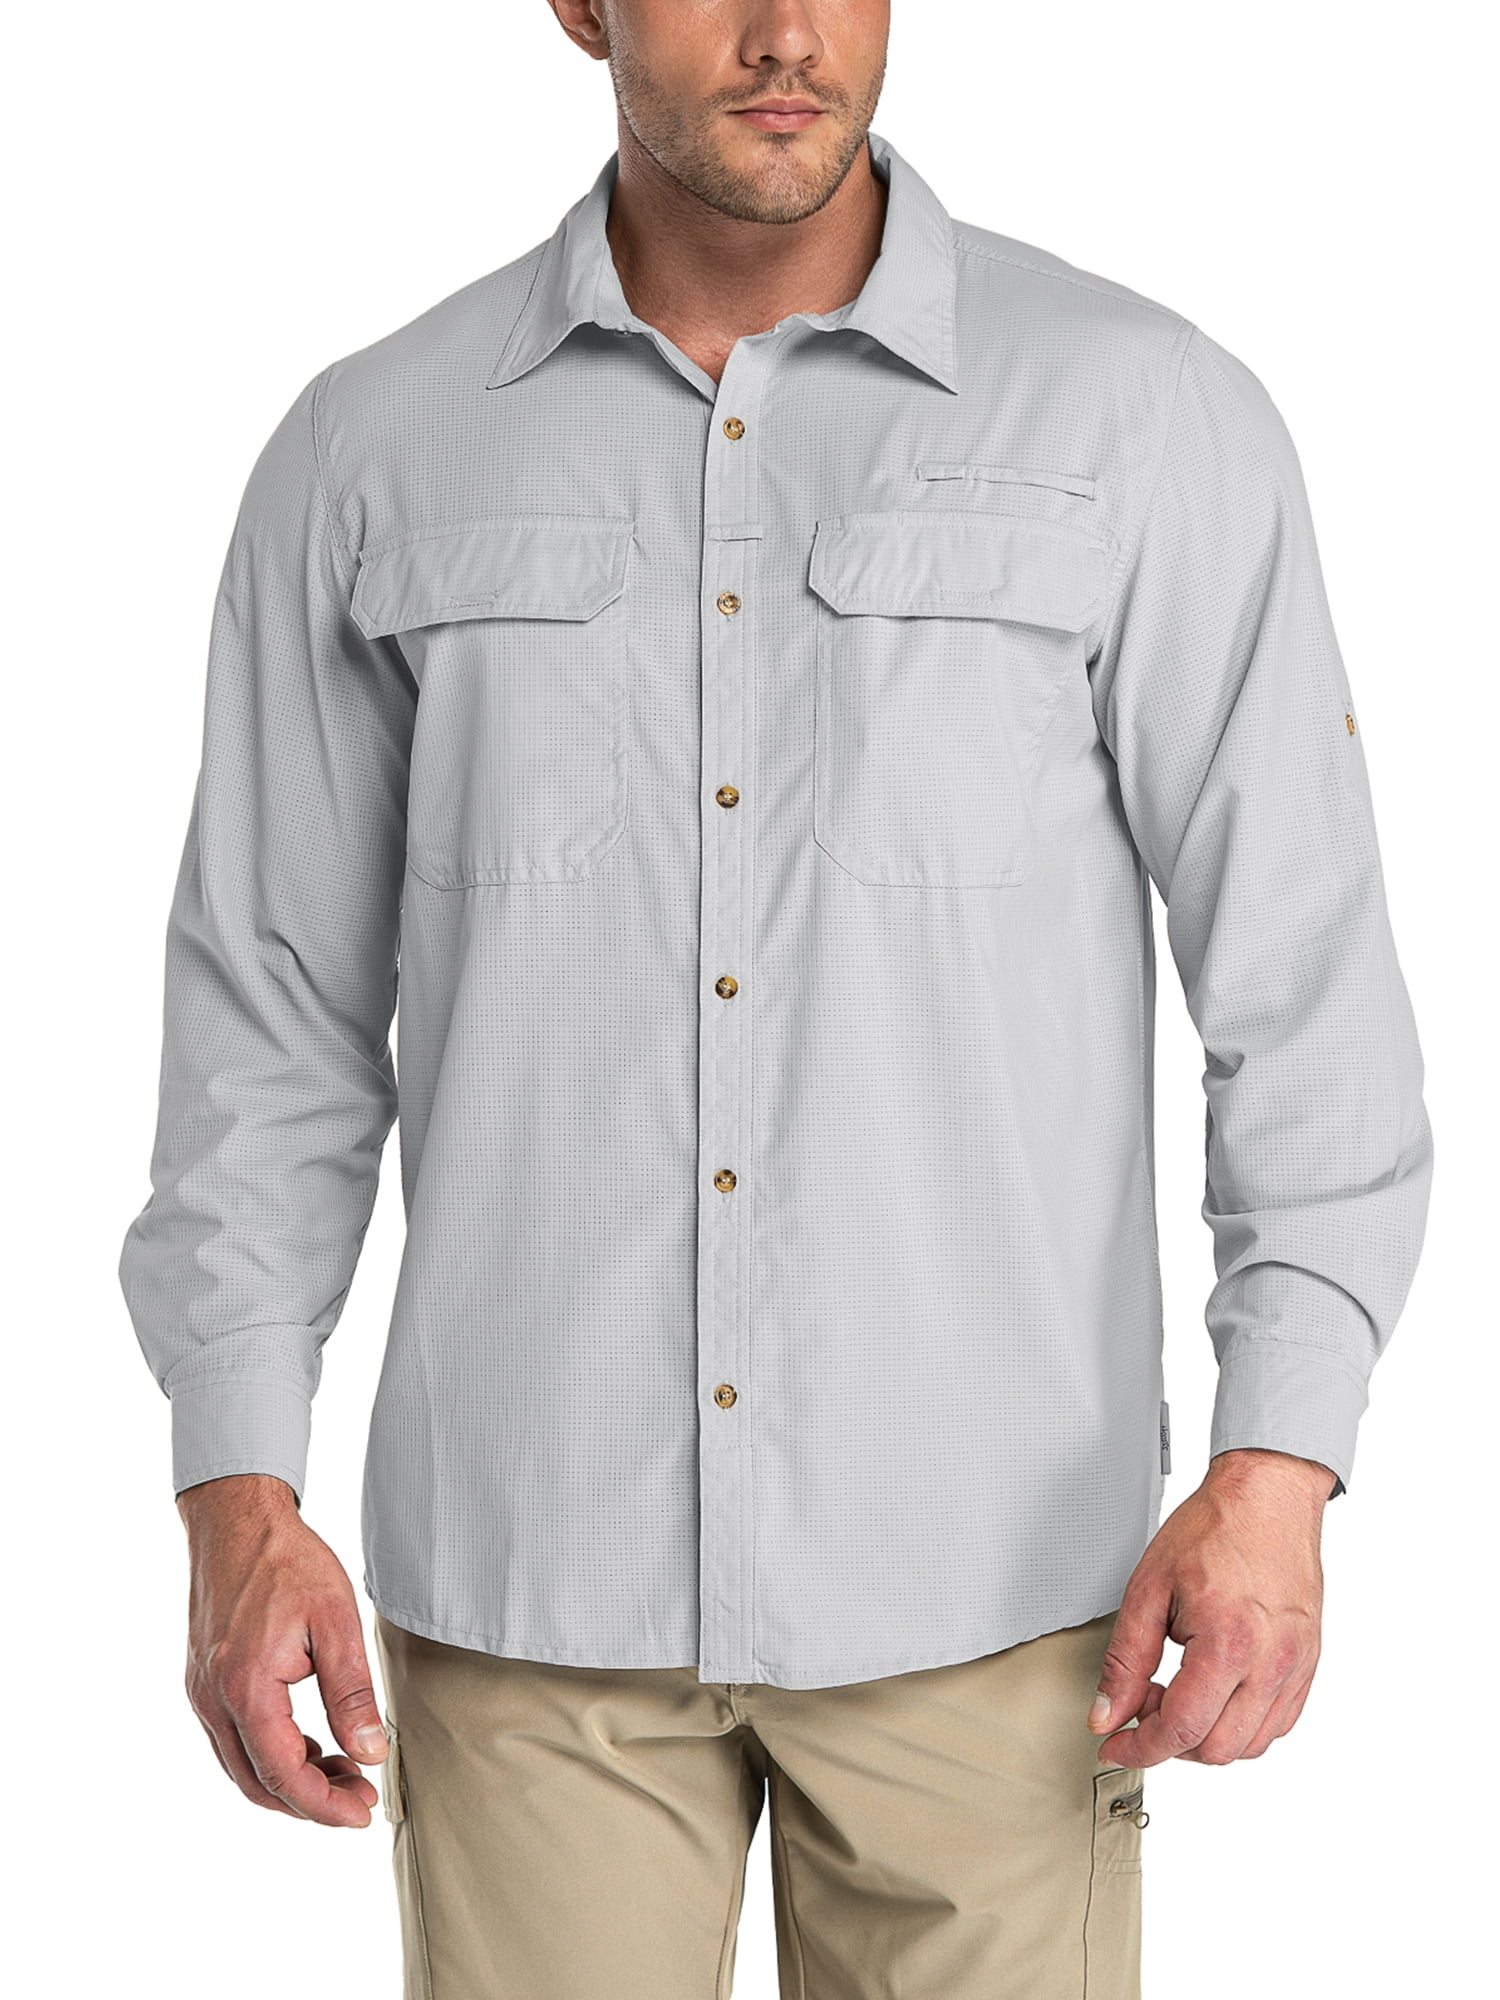 Men's Fishing Shirts, Short & Long Sleeve